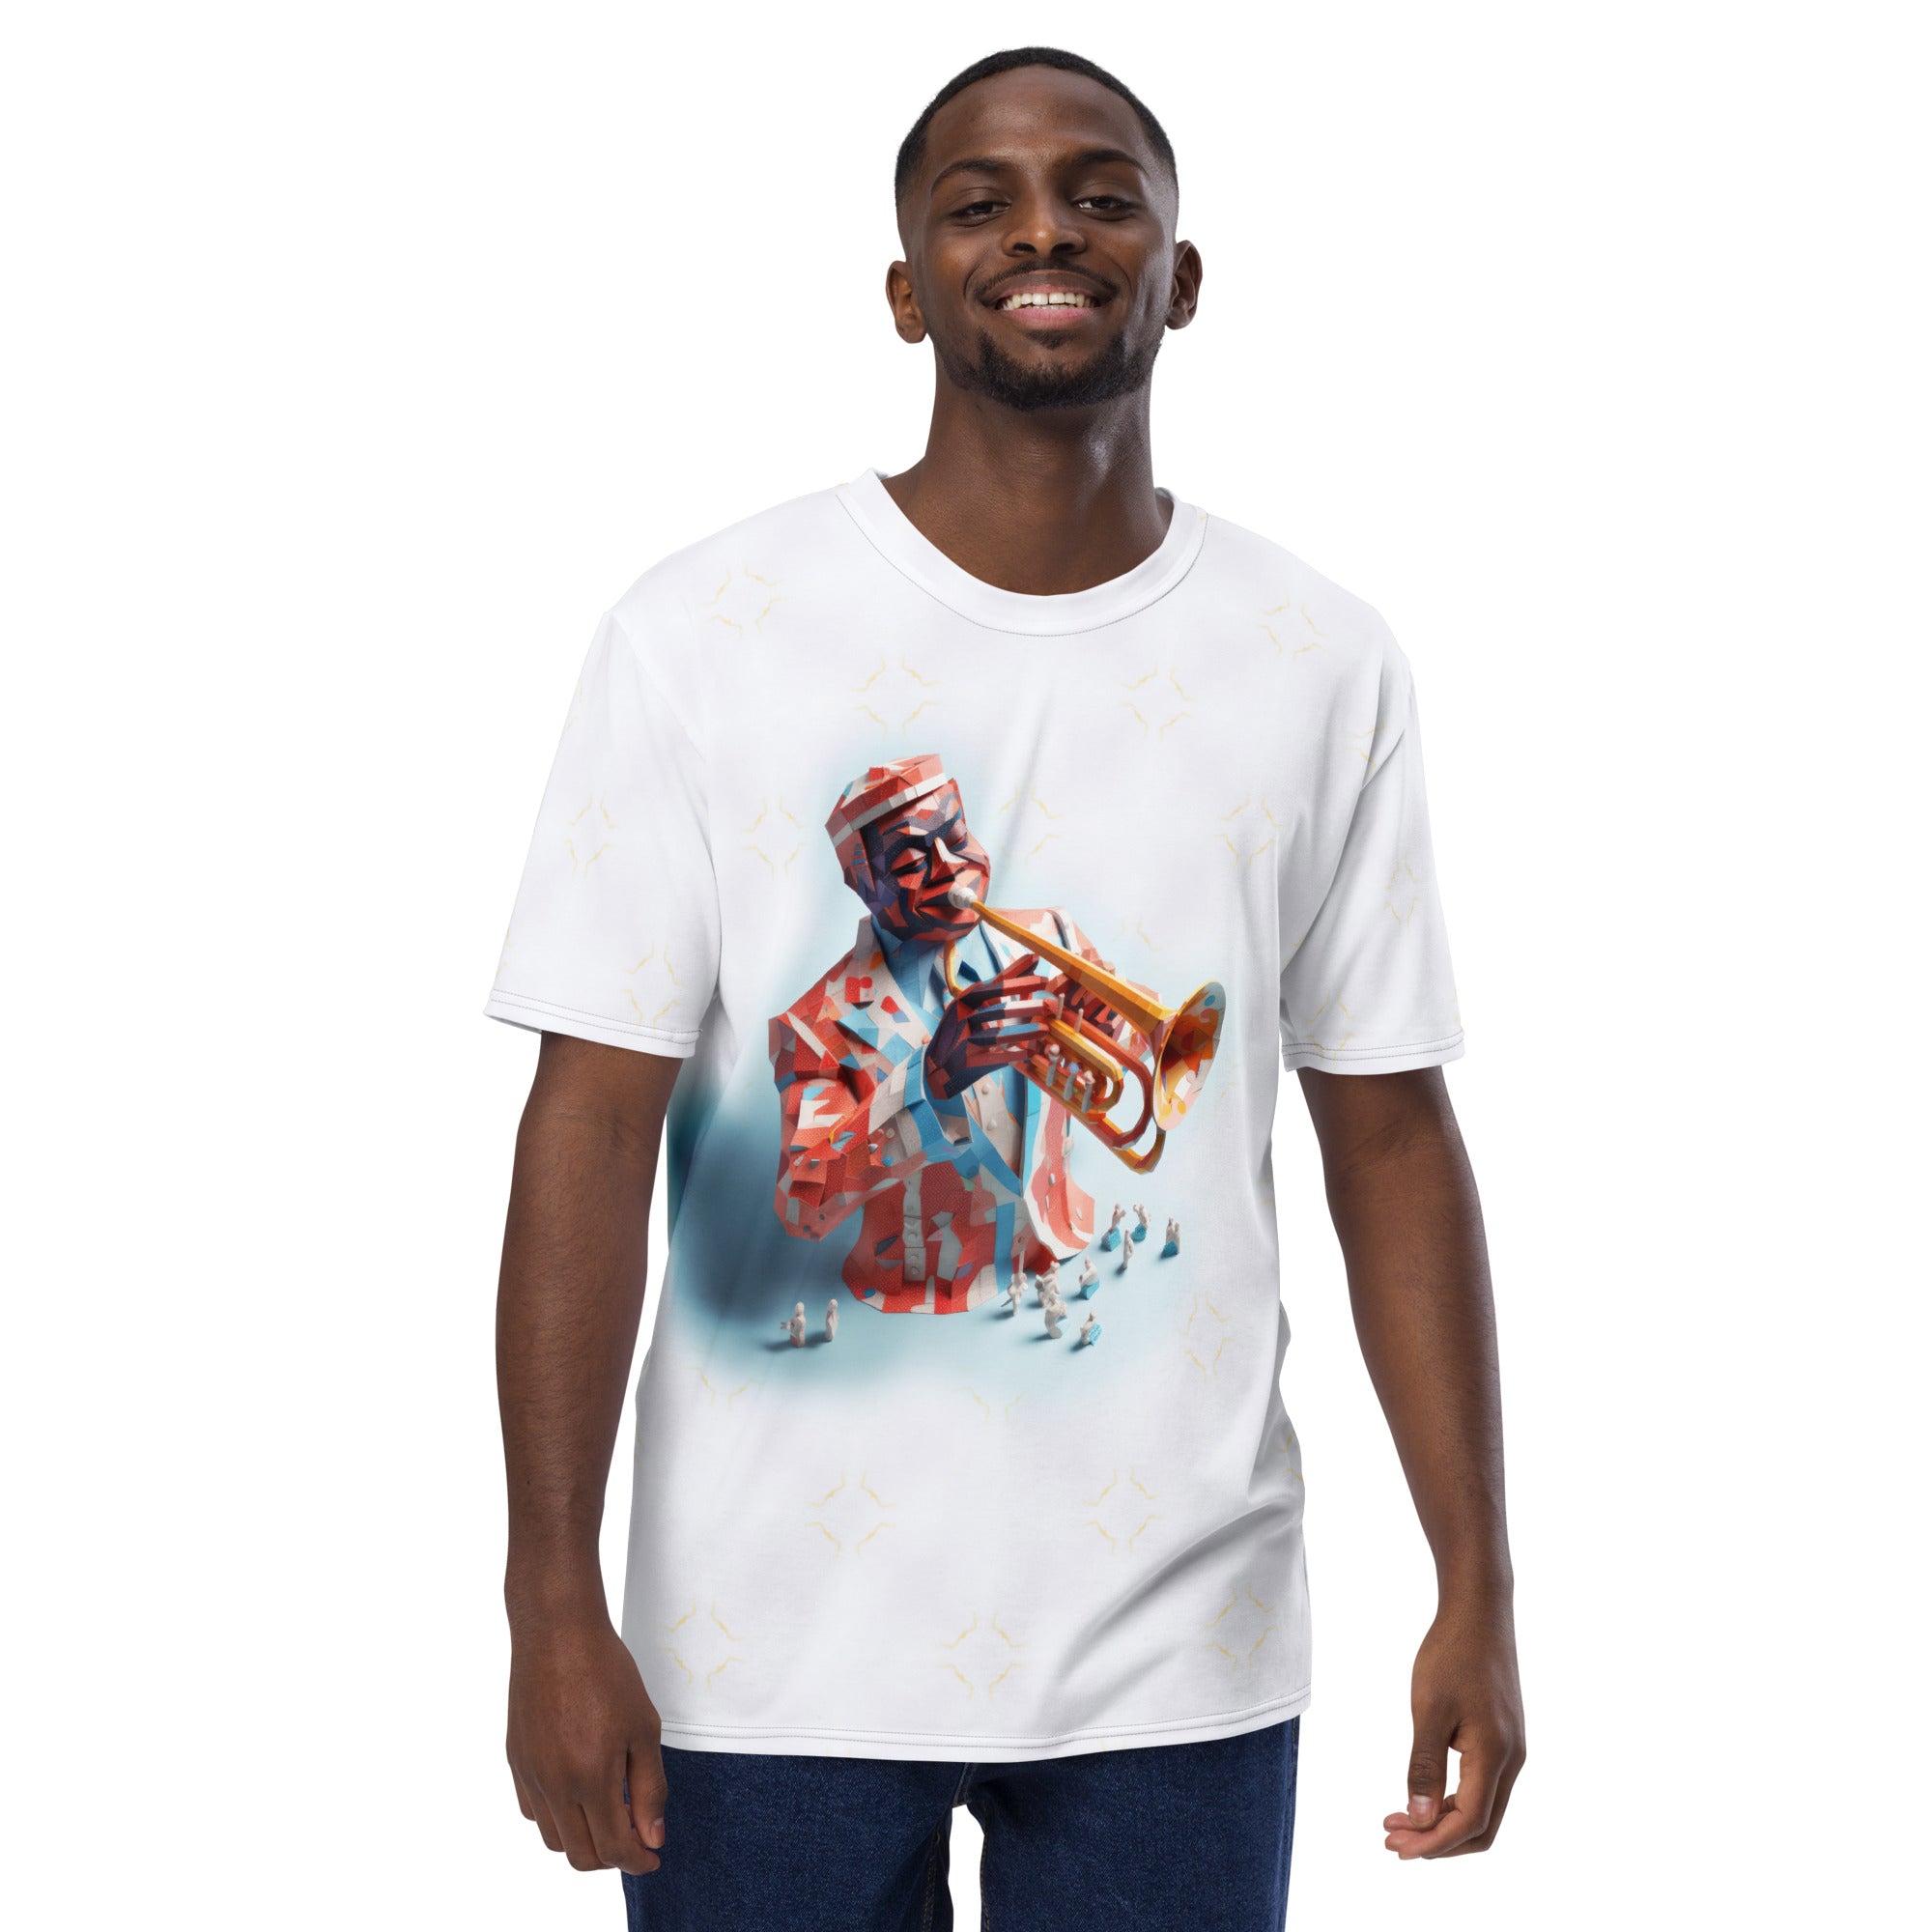 Casual wear Men's T-Shirt featuring Nebula Origami artwork.